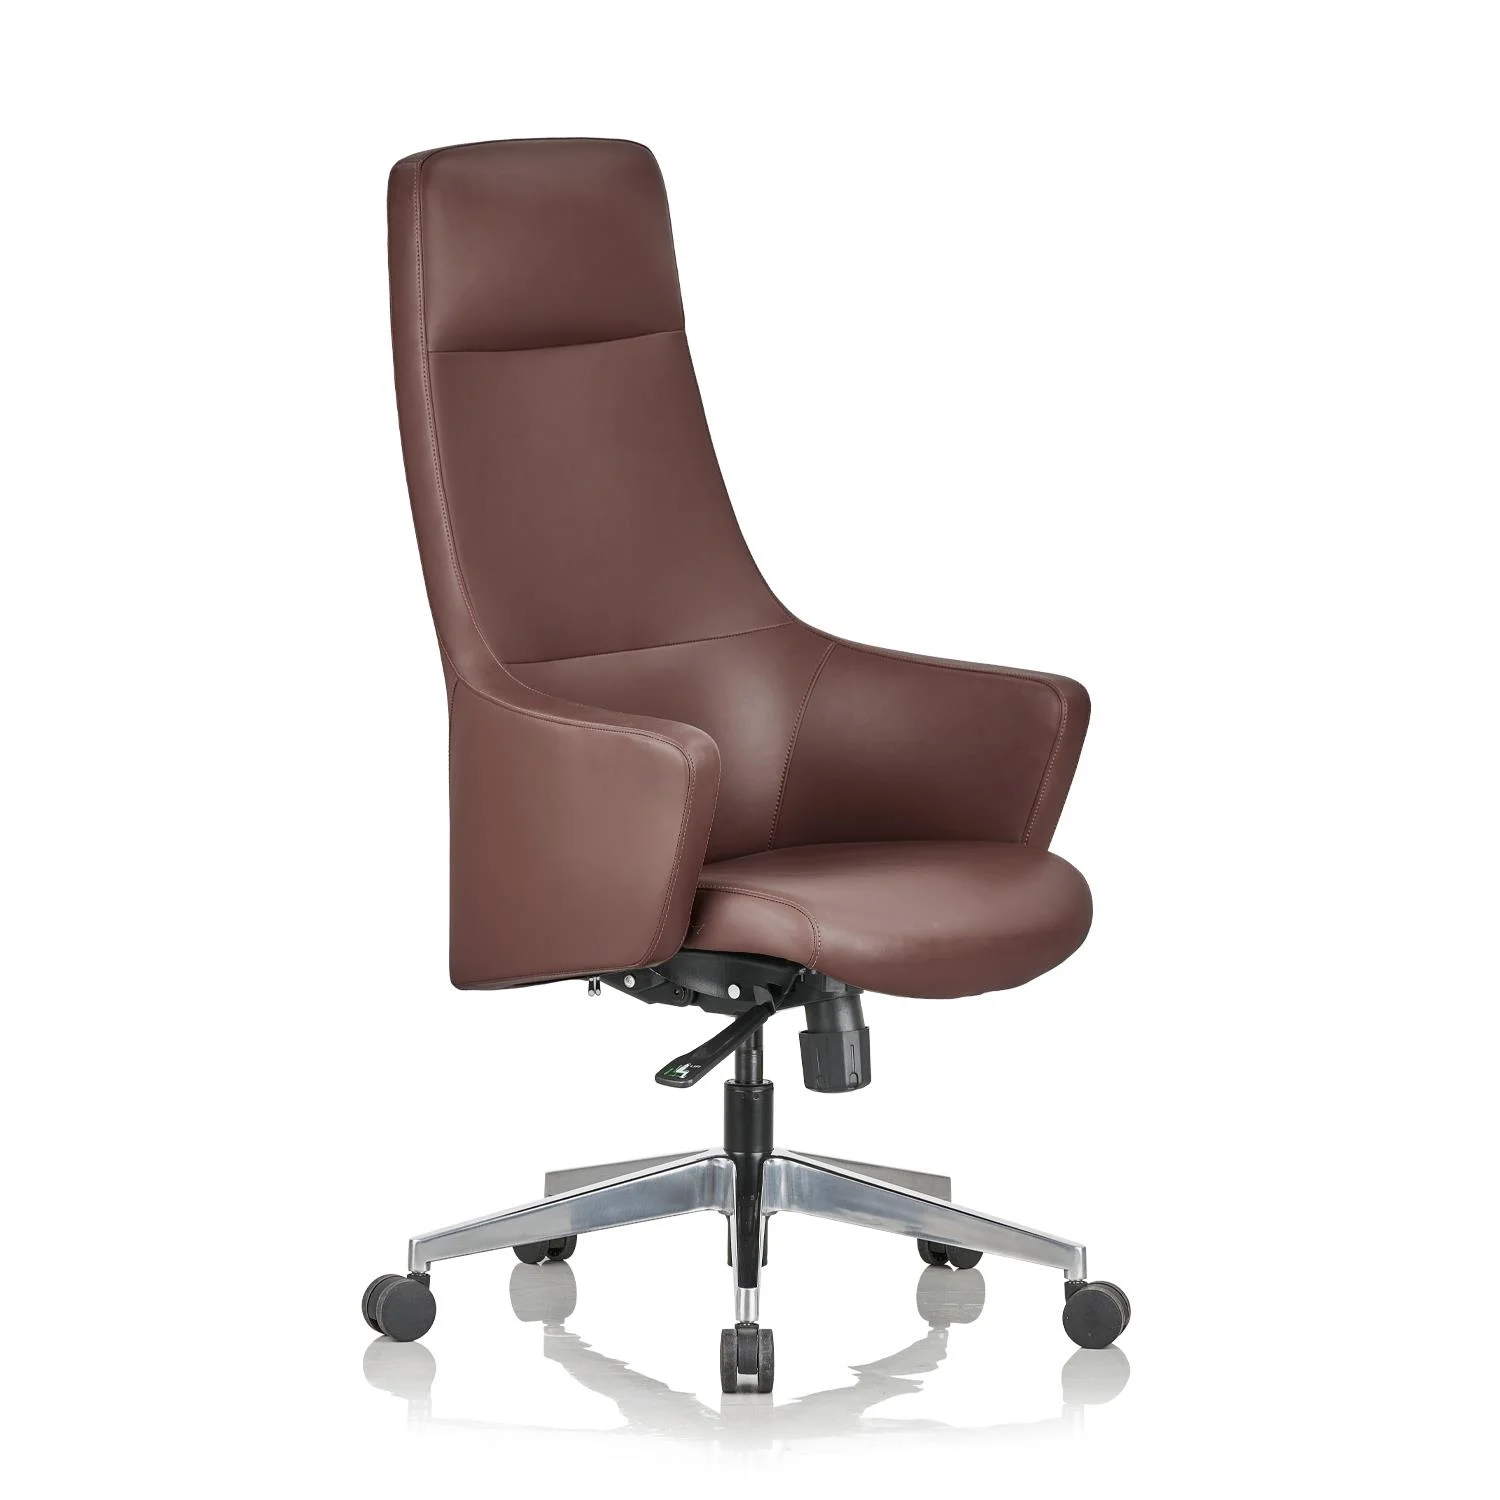 Indigo High Back Leather Chair